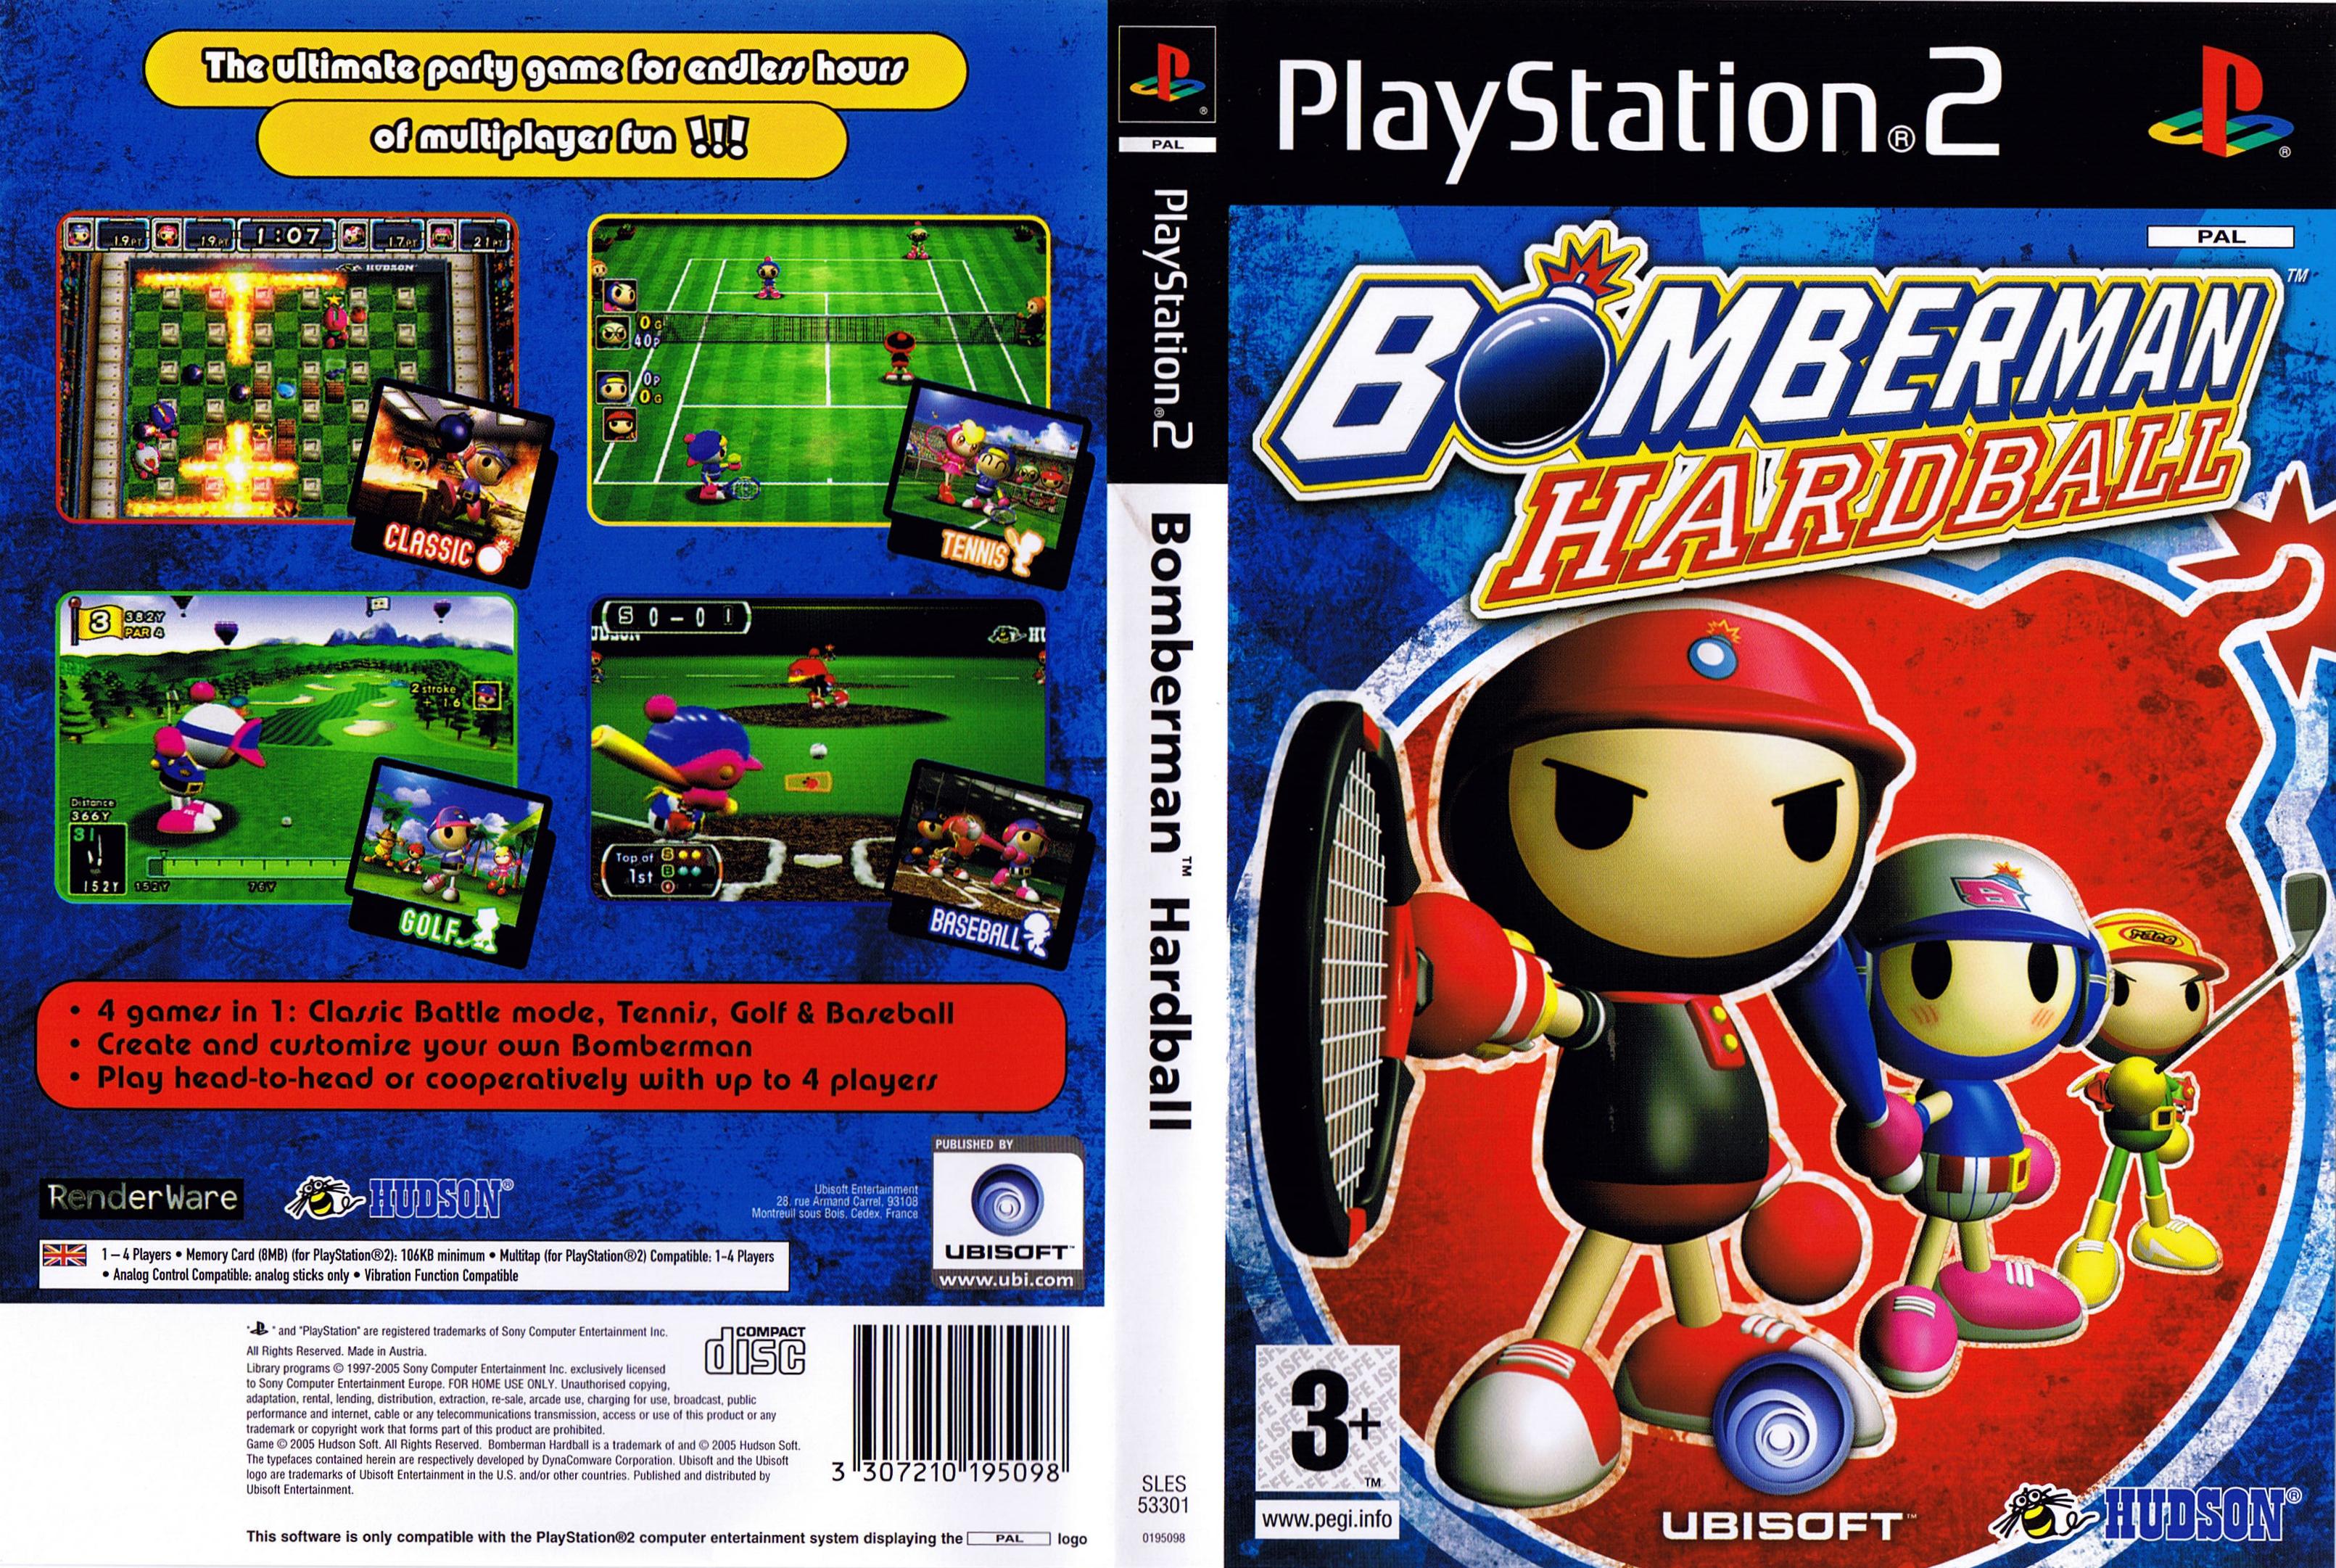 Jogo Bomberman Hardball - PS2 (EUROPEU) - MeuGameUsado